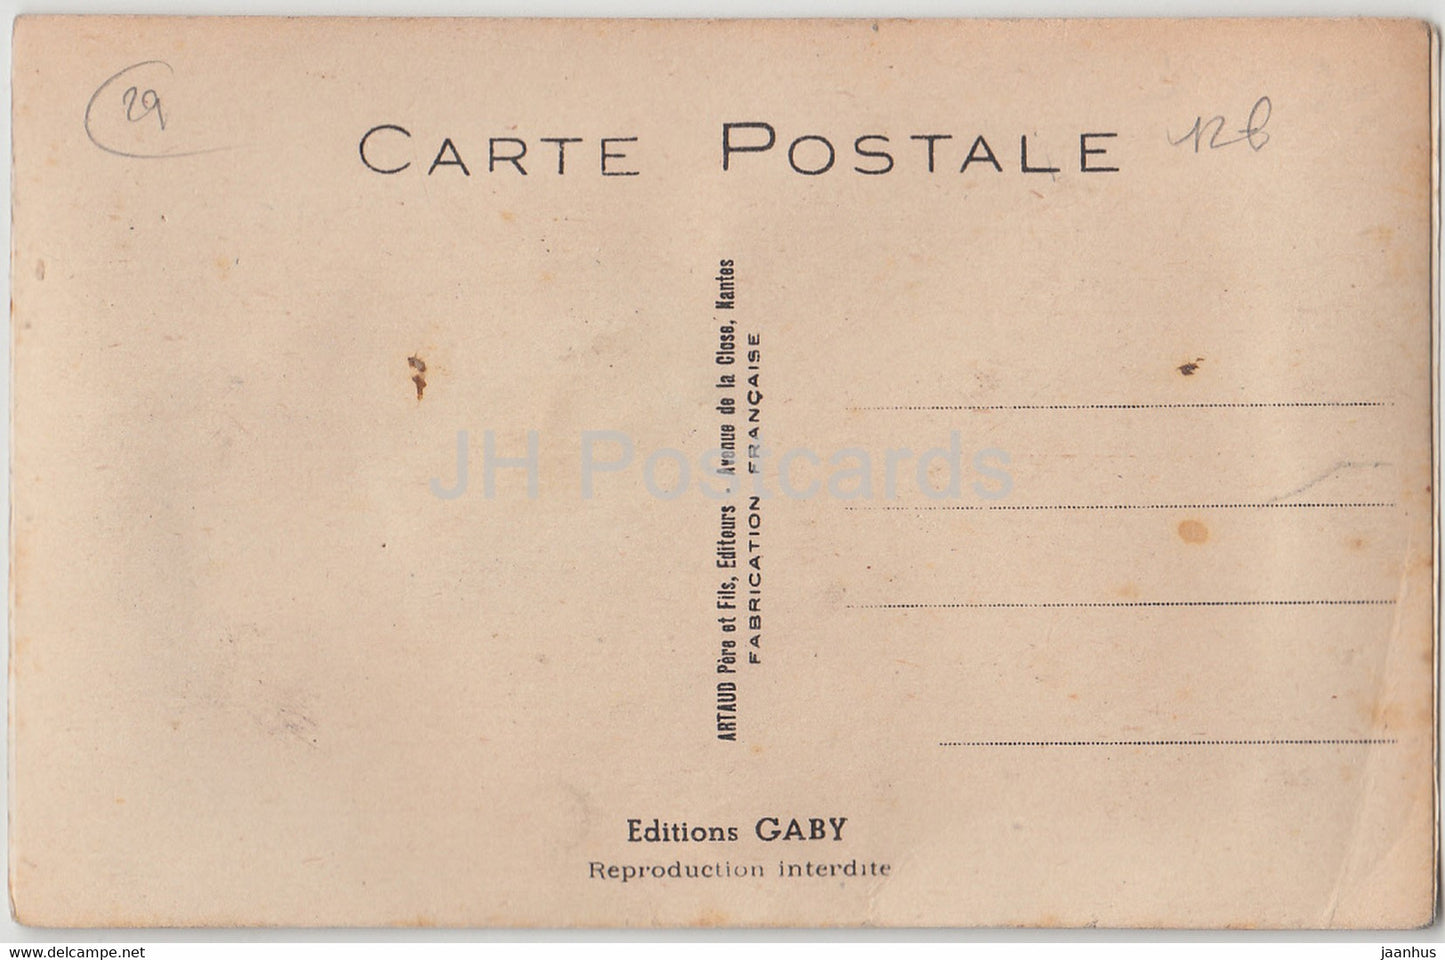 En route pour Carhaix – Humor – alte Postkarte – Frankreich – unbenutzt